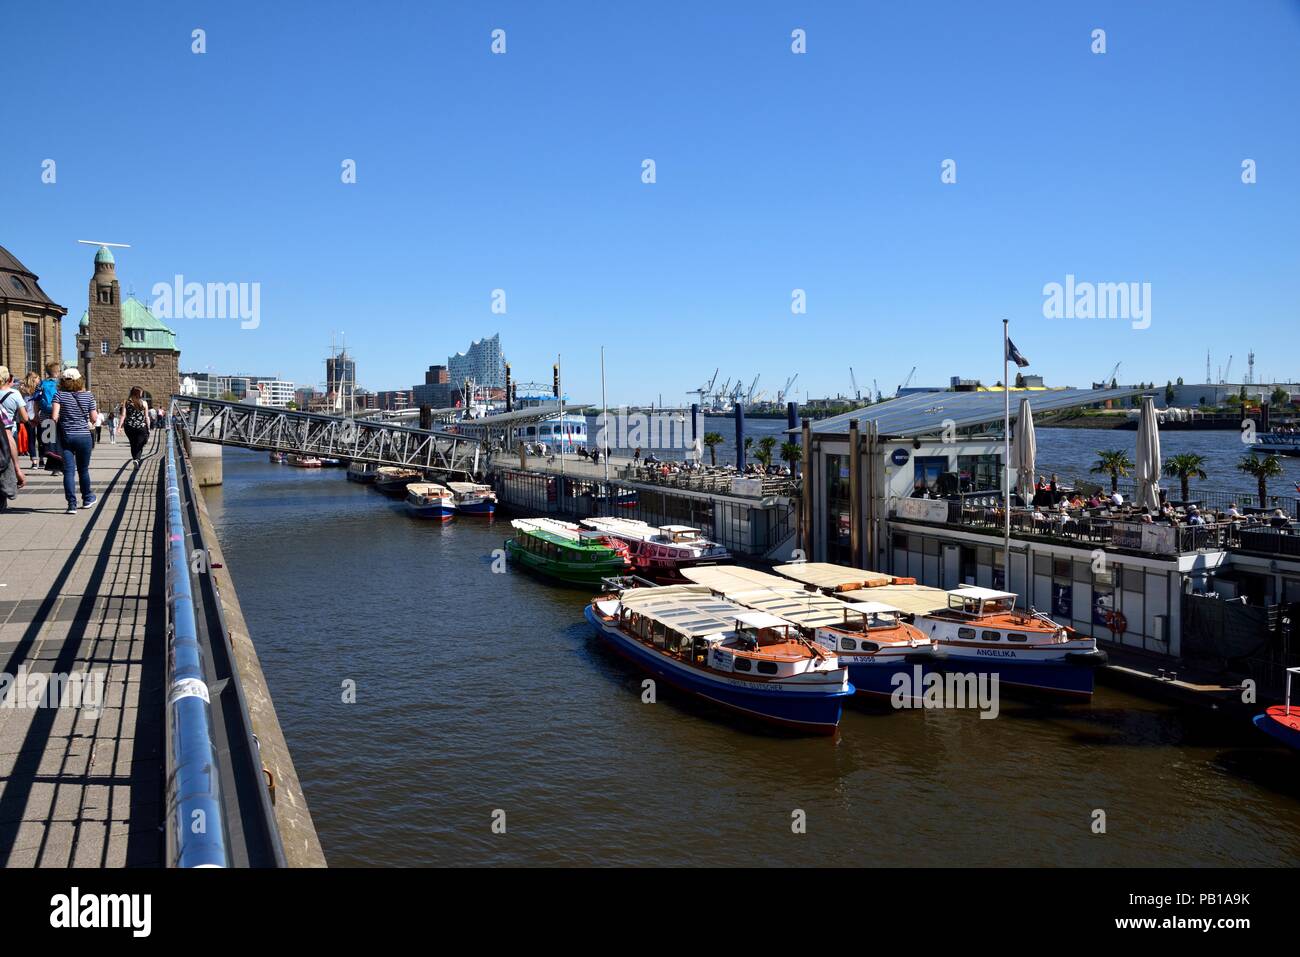 Landungsbruecken, dal porto di Amburgo, Amburgo, Germania Foto Stock